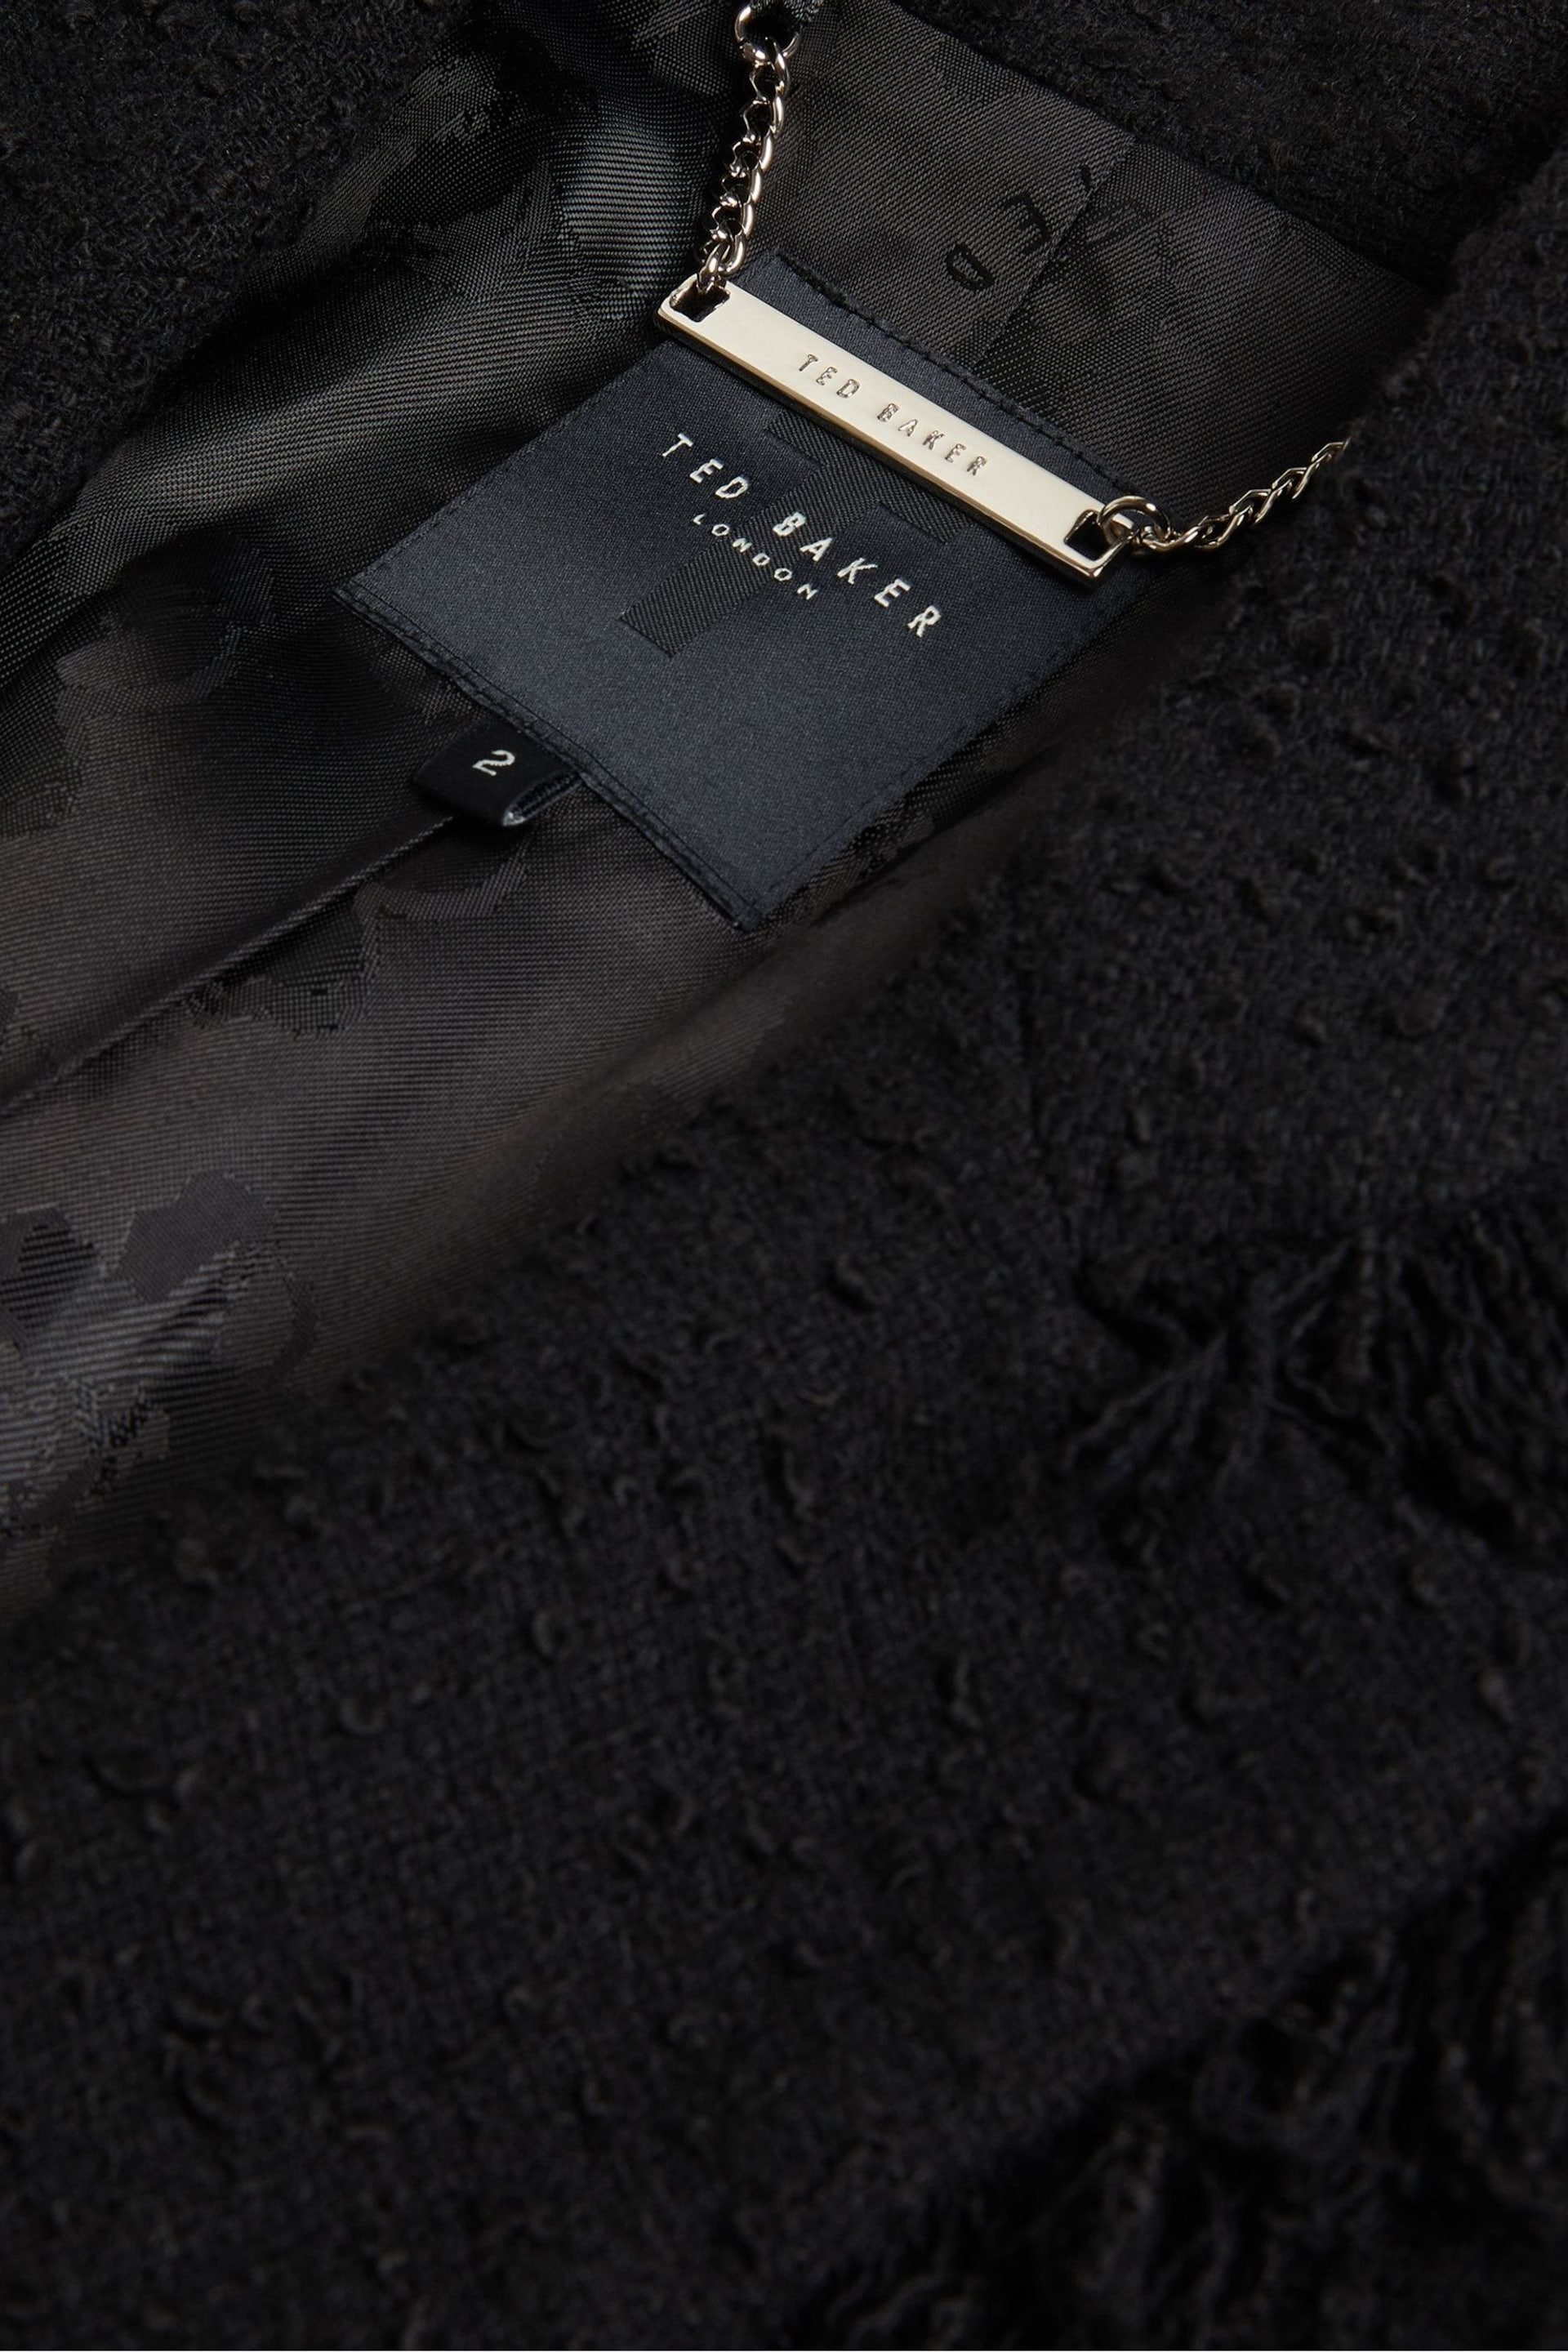 Ted Baker Black Longline Melliie Single Breasted Leather Blazer - Image 6 of 6